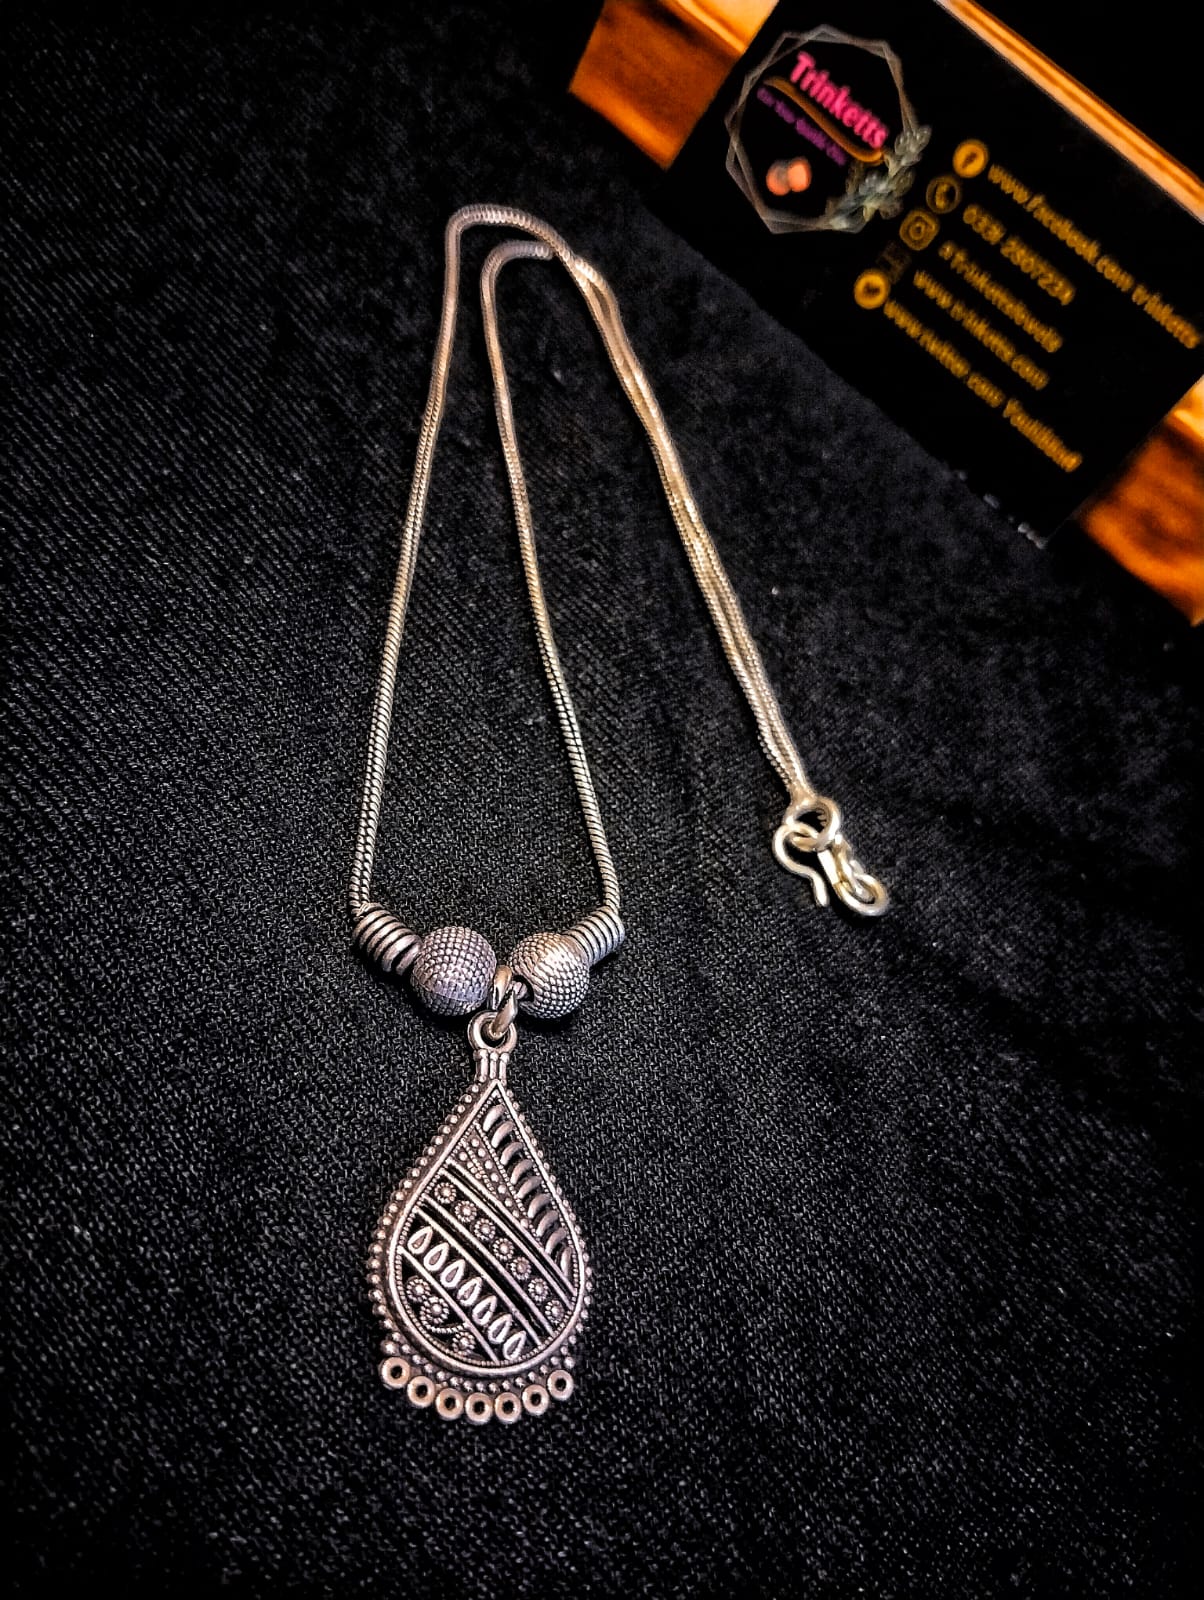 Oxidized Silver Chain Pendant with Elegant Drop Design